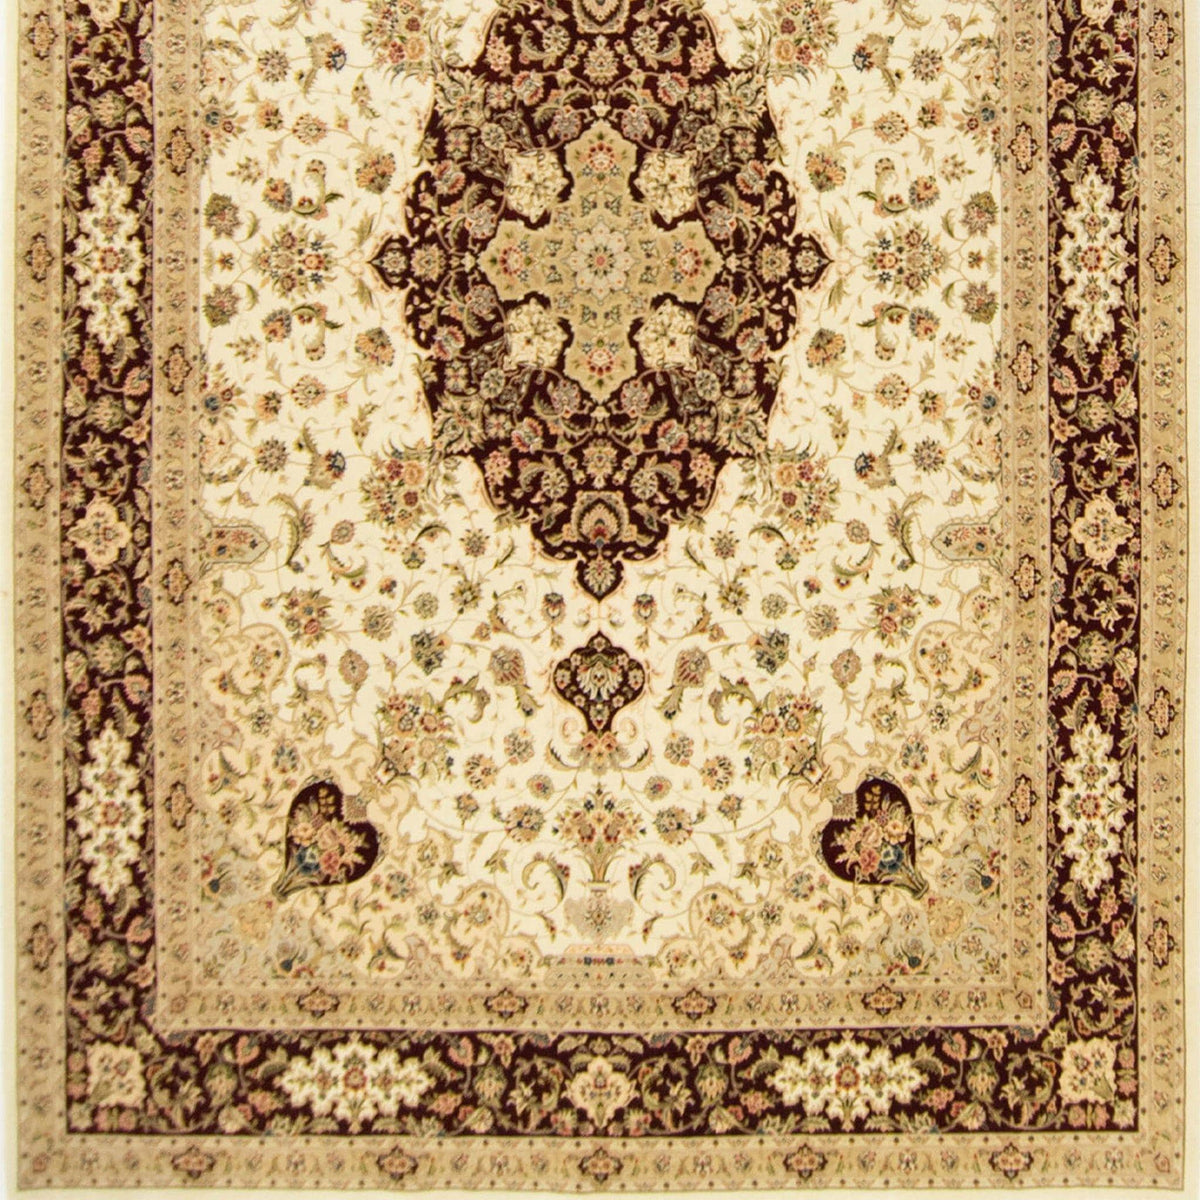 Super Fine Hand-knotted Wool and Silk Tabriz Rug 250cm x 350cm